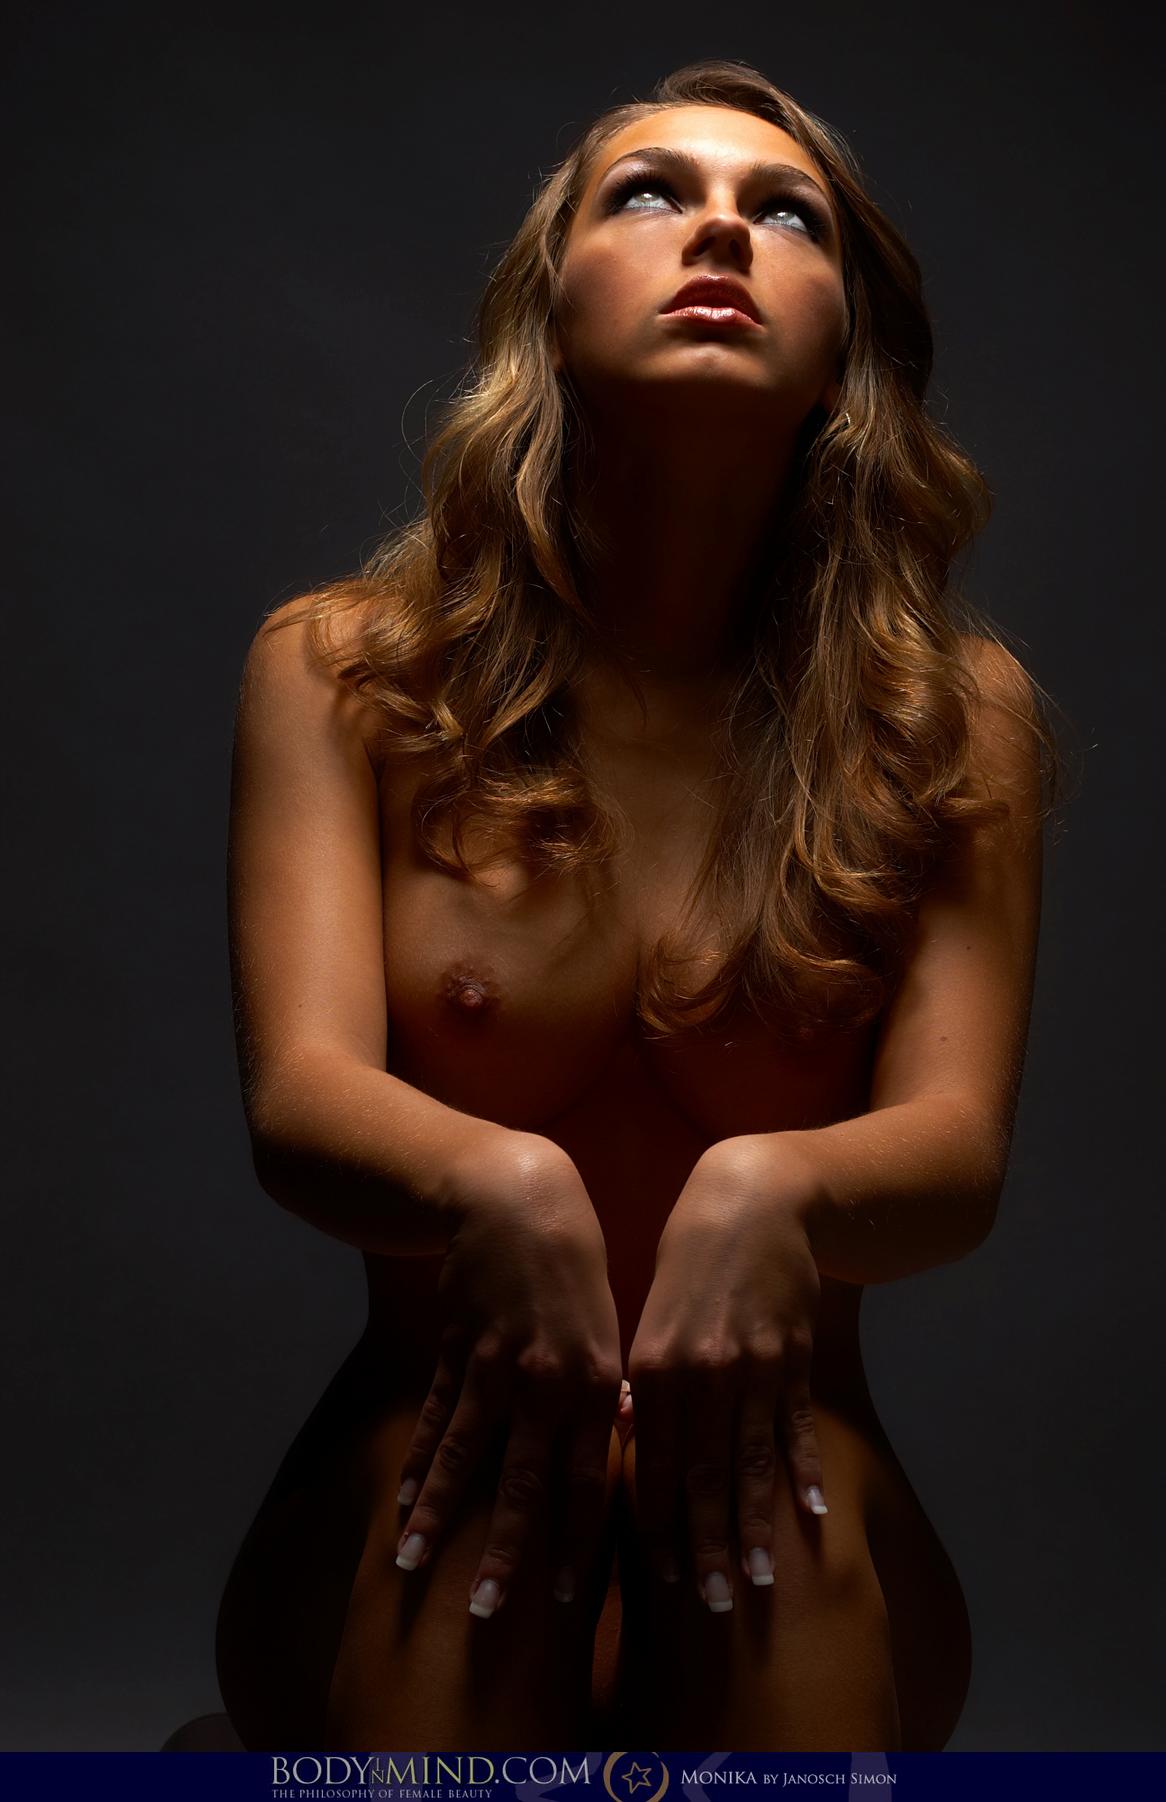 Andrea Krumlova, blonde, nude, pose, shadows